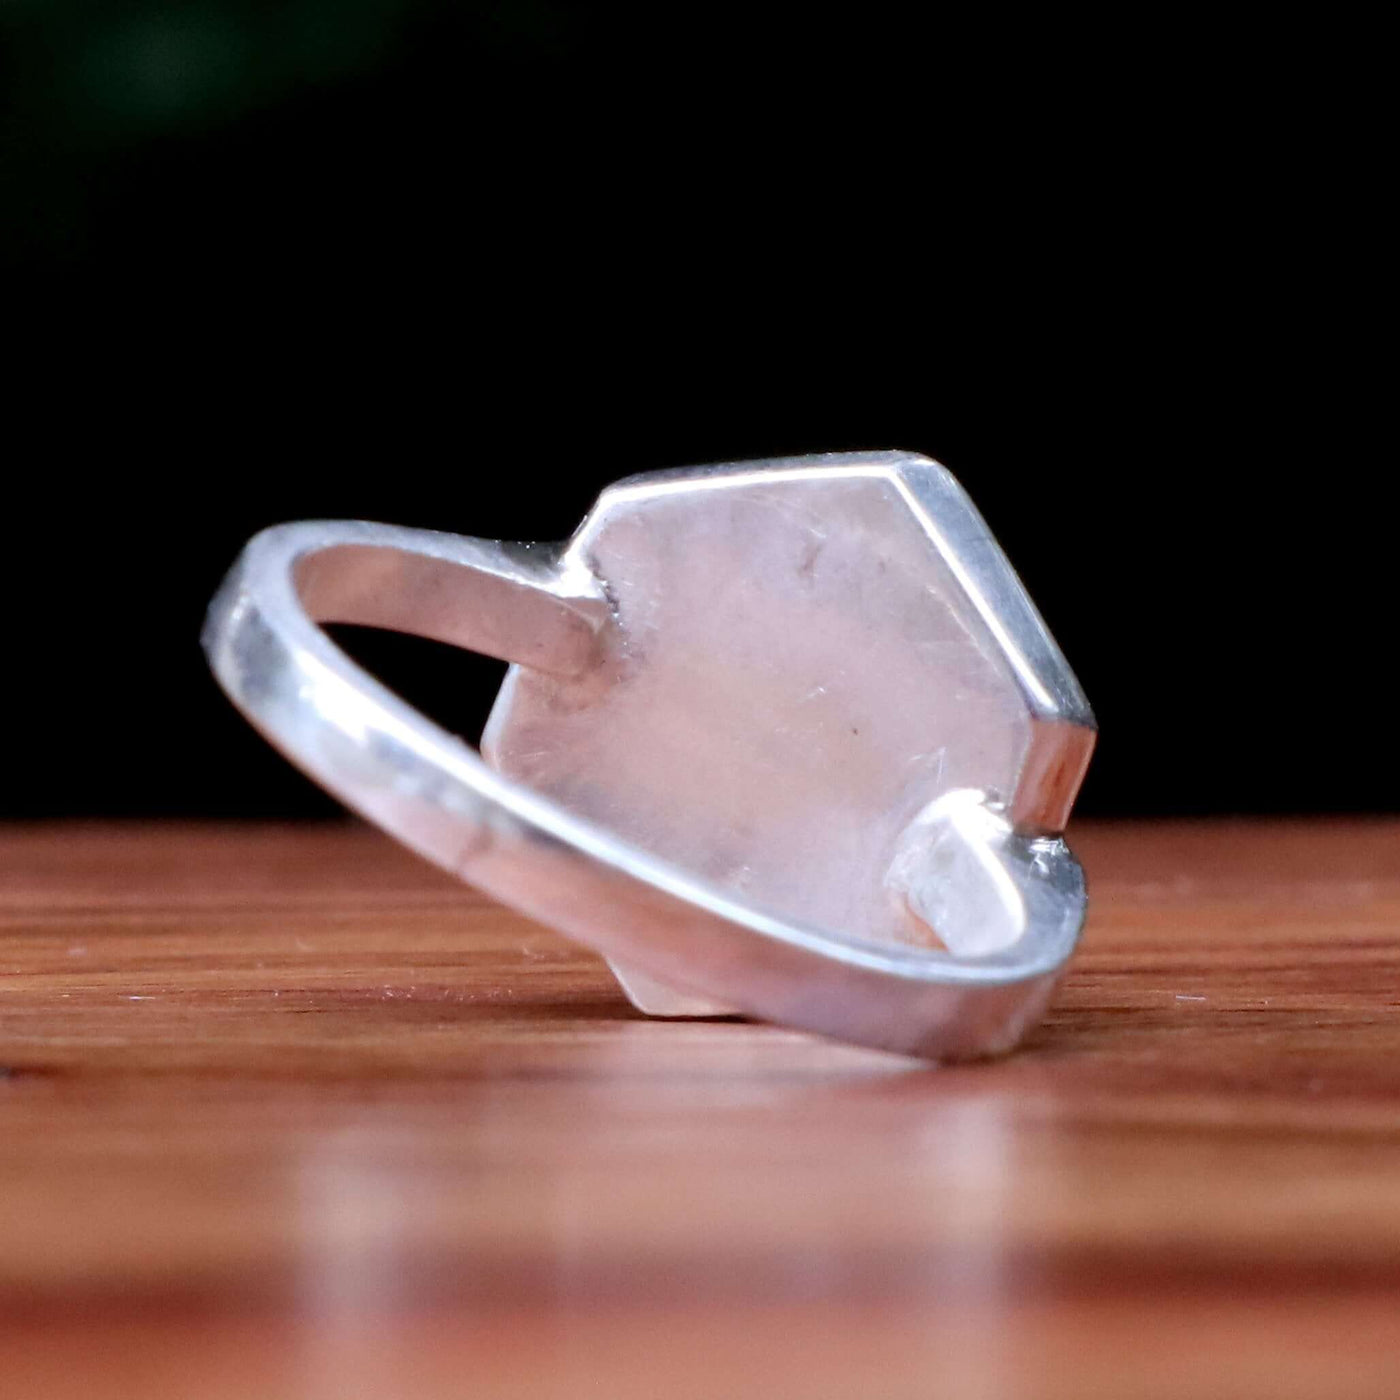 Diamond Cut Orange Yemeni Aqeeq Ring For Ladies | Handmade Silver Akik Stone Ring For Women | US Size 6.5 - AlAliGems